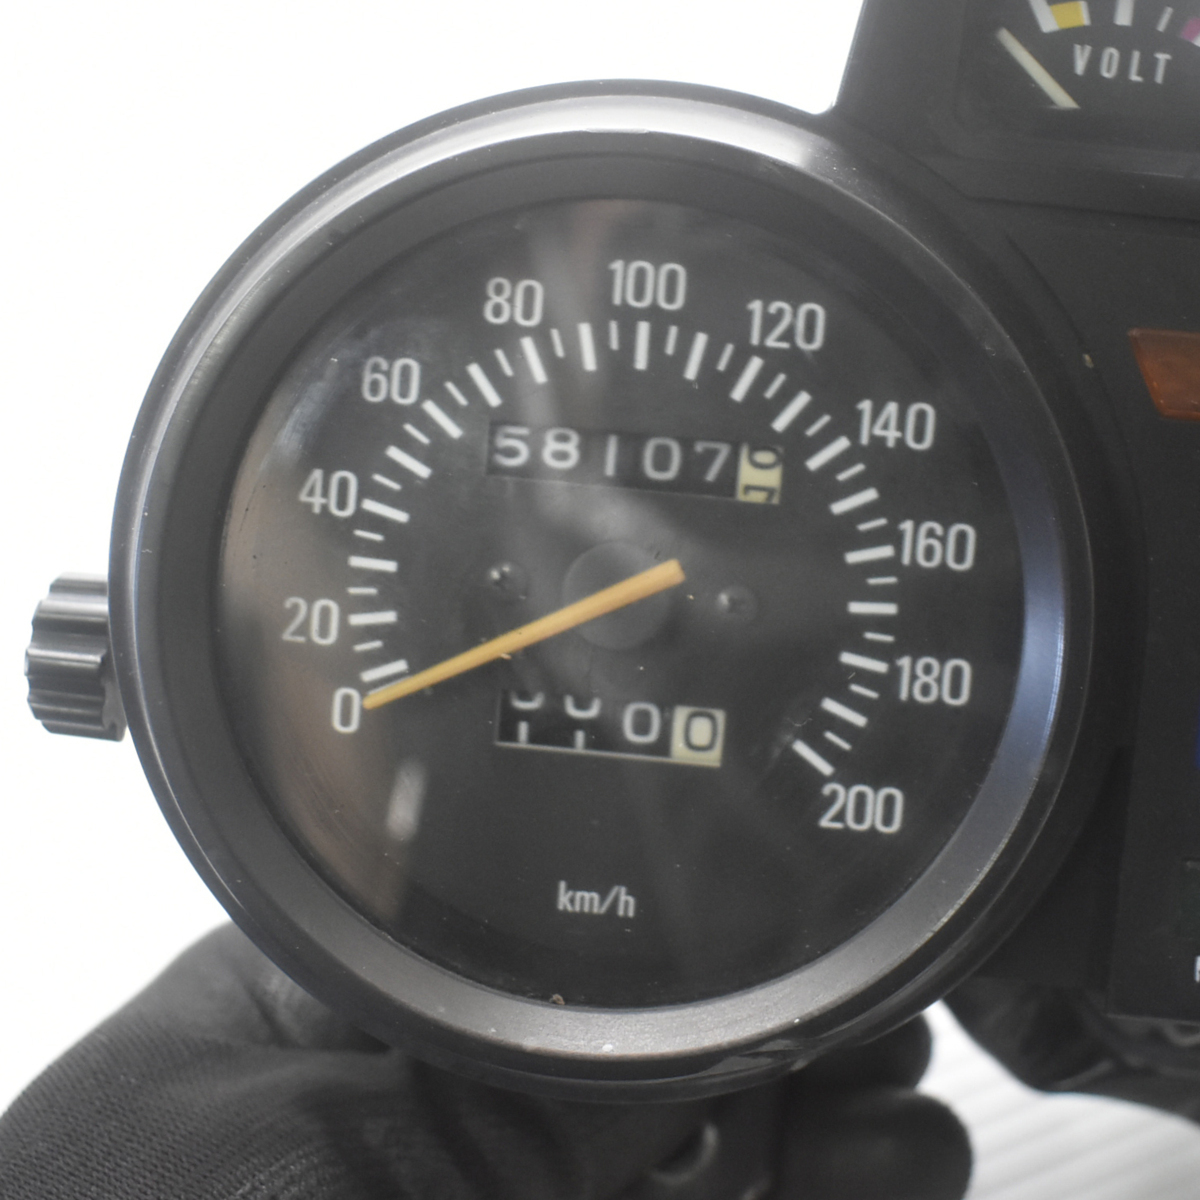  Yamaha XJ550 4V8 58107km speed meter [B]BER